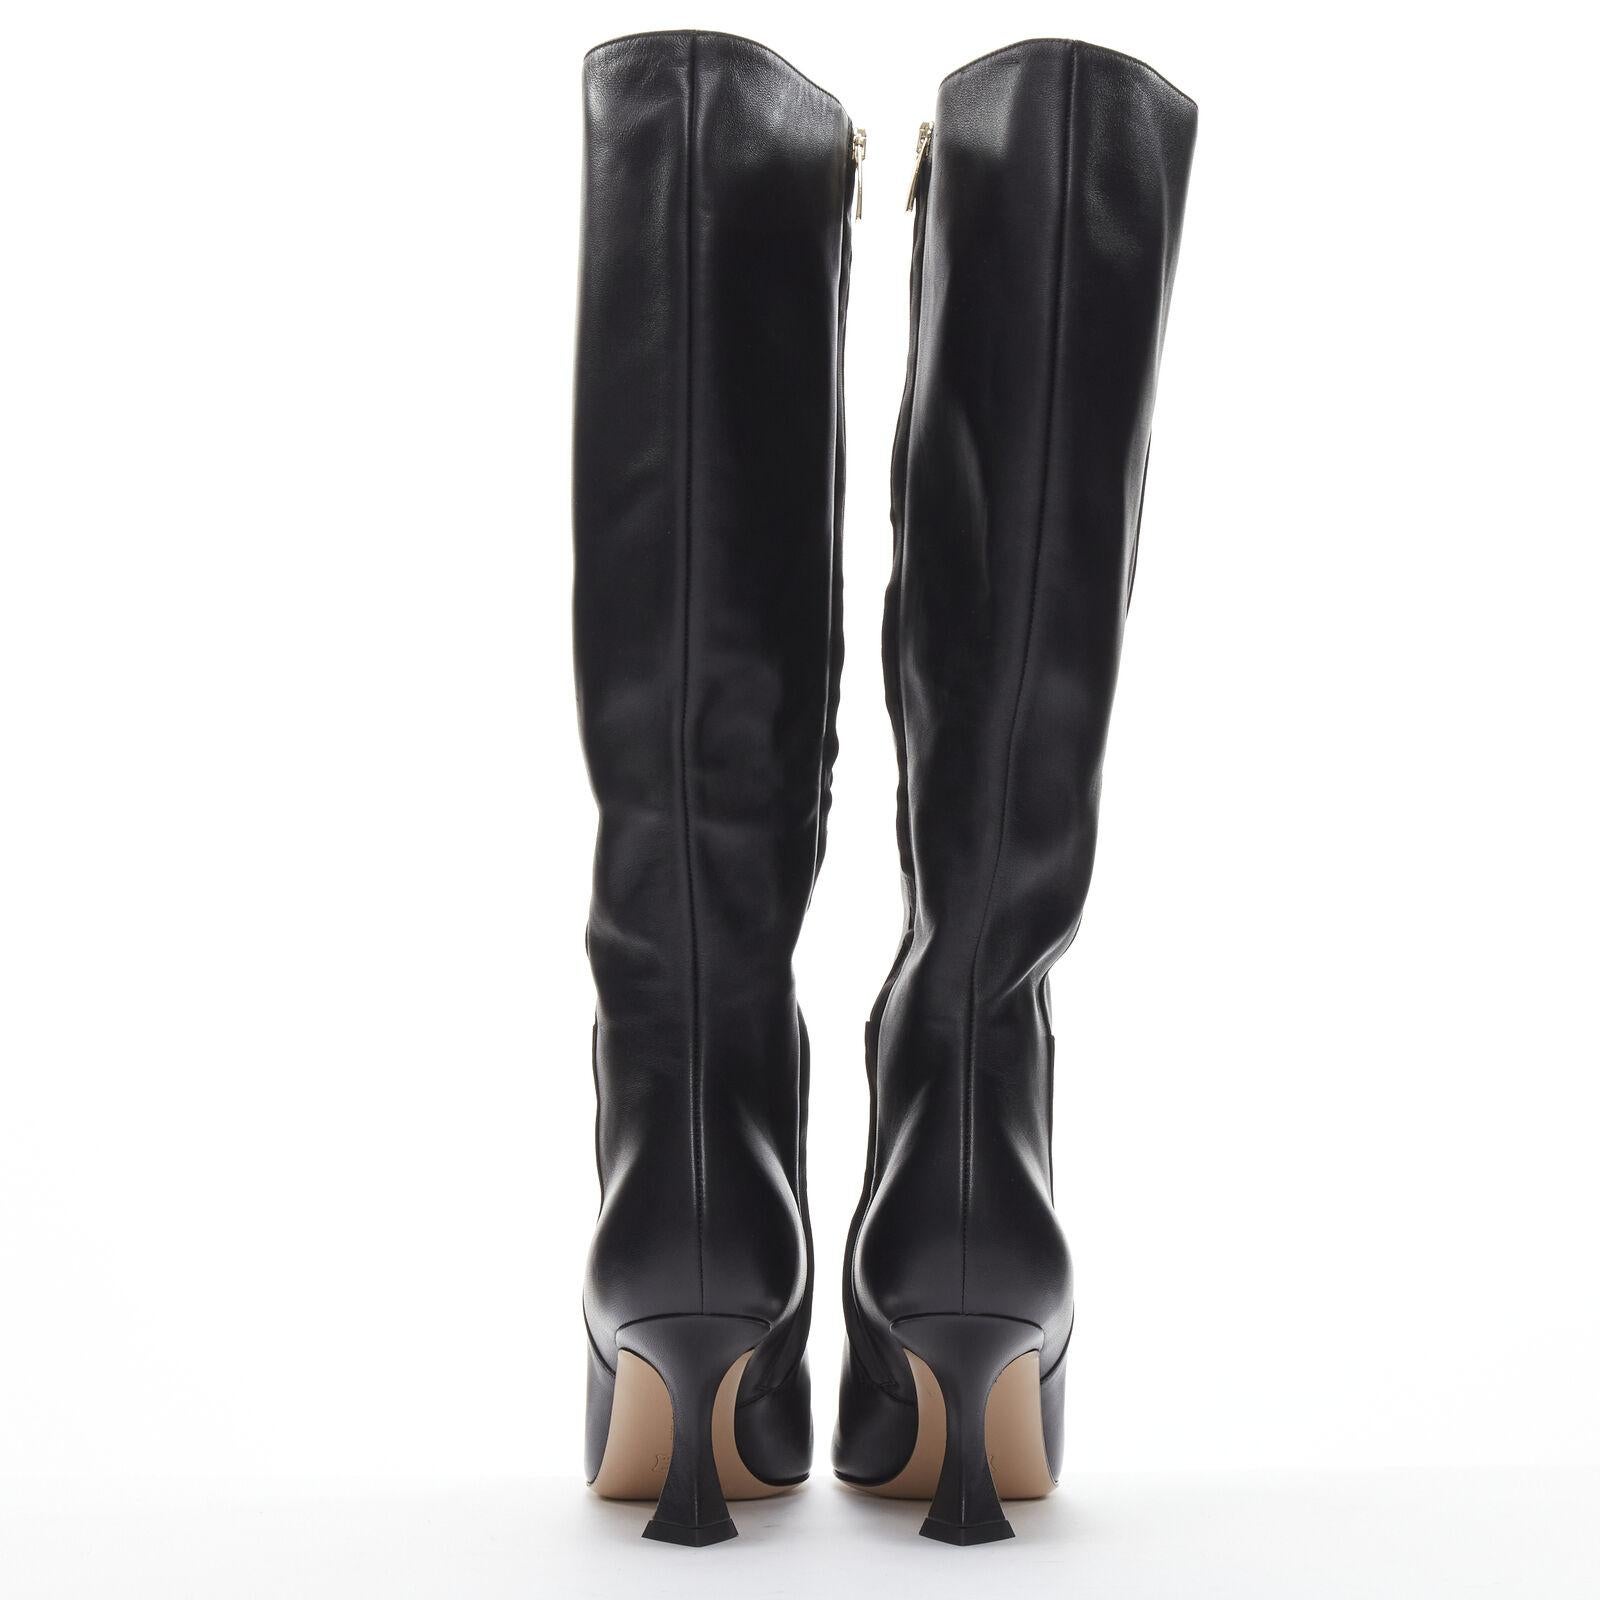 GIANVITO ROSSI black leather point toe spool heeled tall boots EU39 US9 2